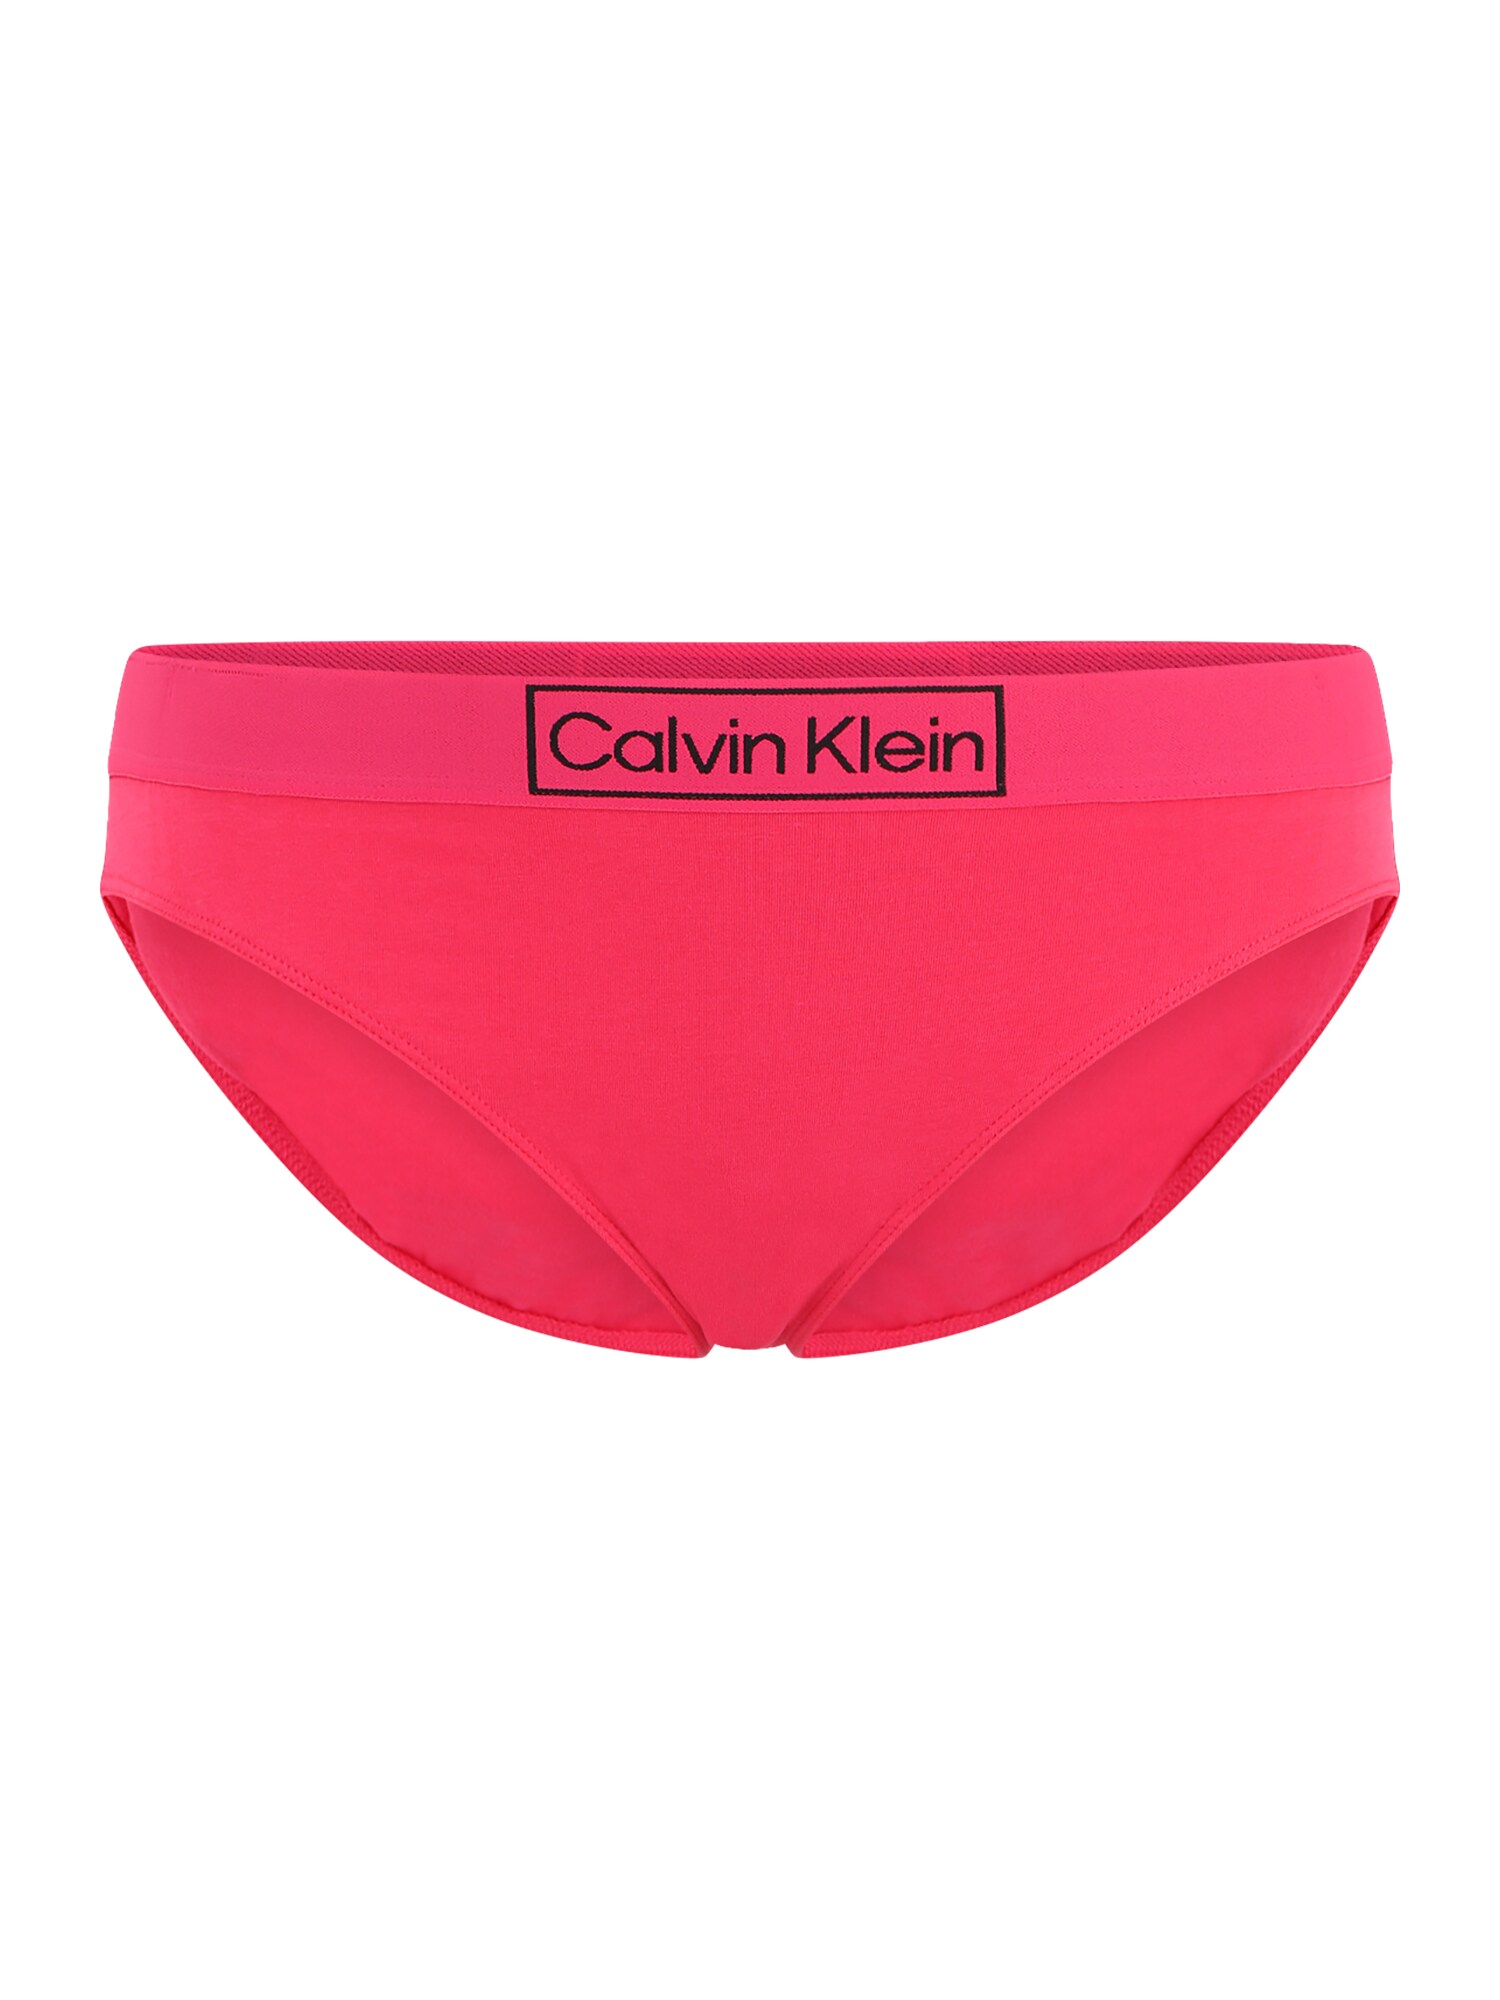 Calvin Klein Underwear Plus Moteriškos kelnaitės fuksijų spalva / juoda